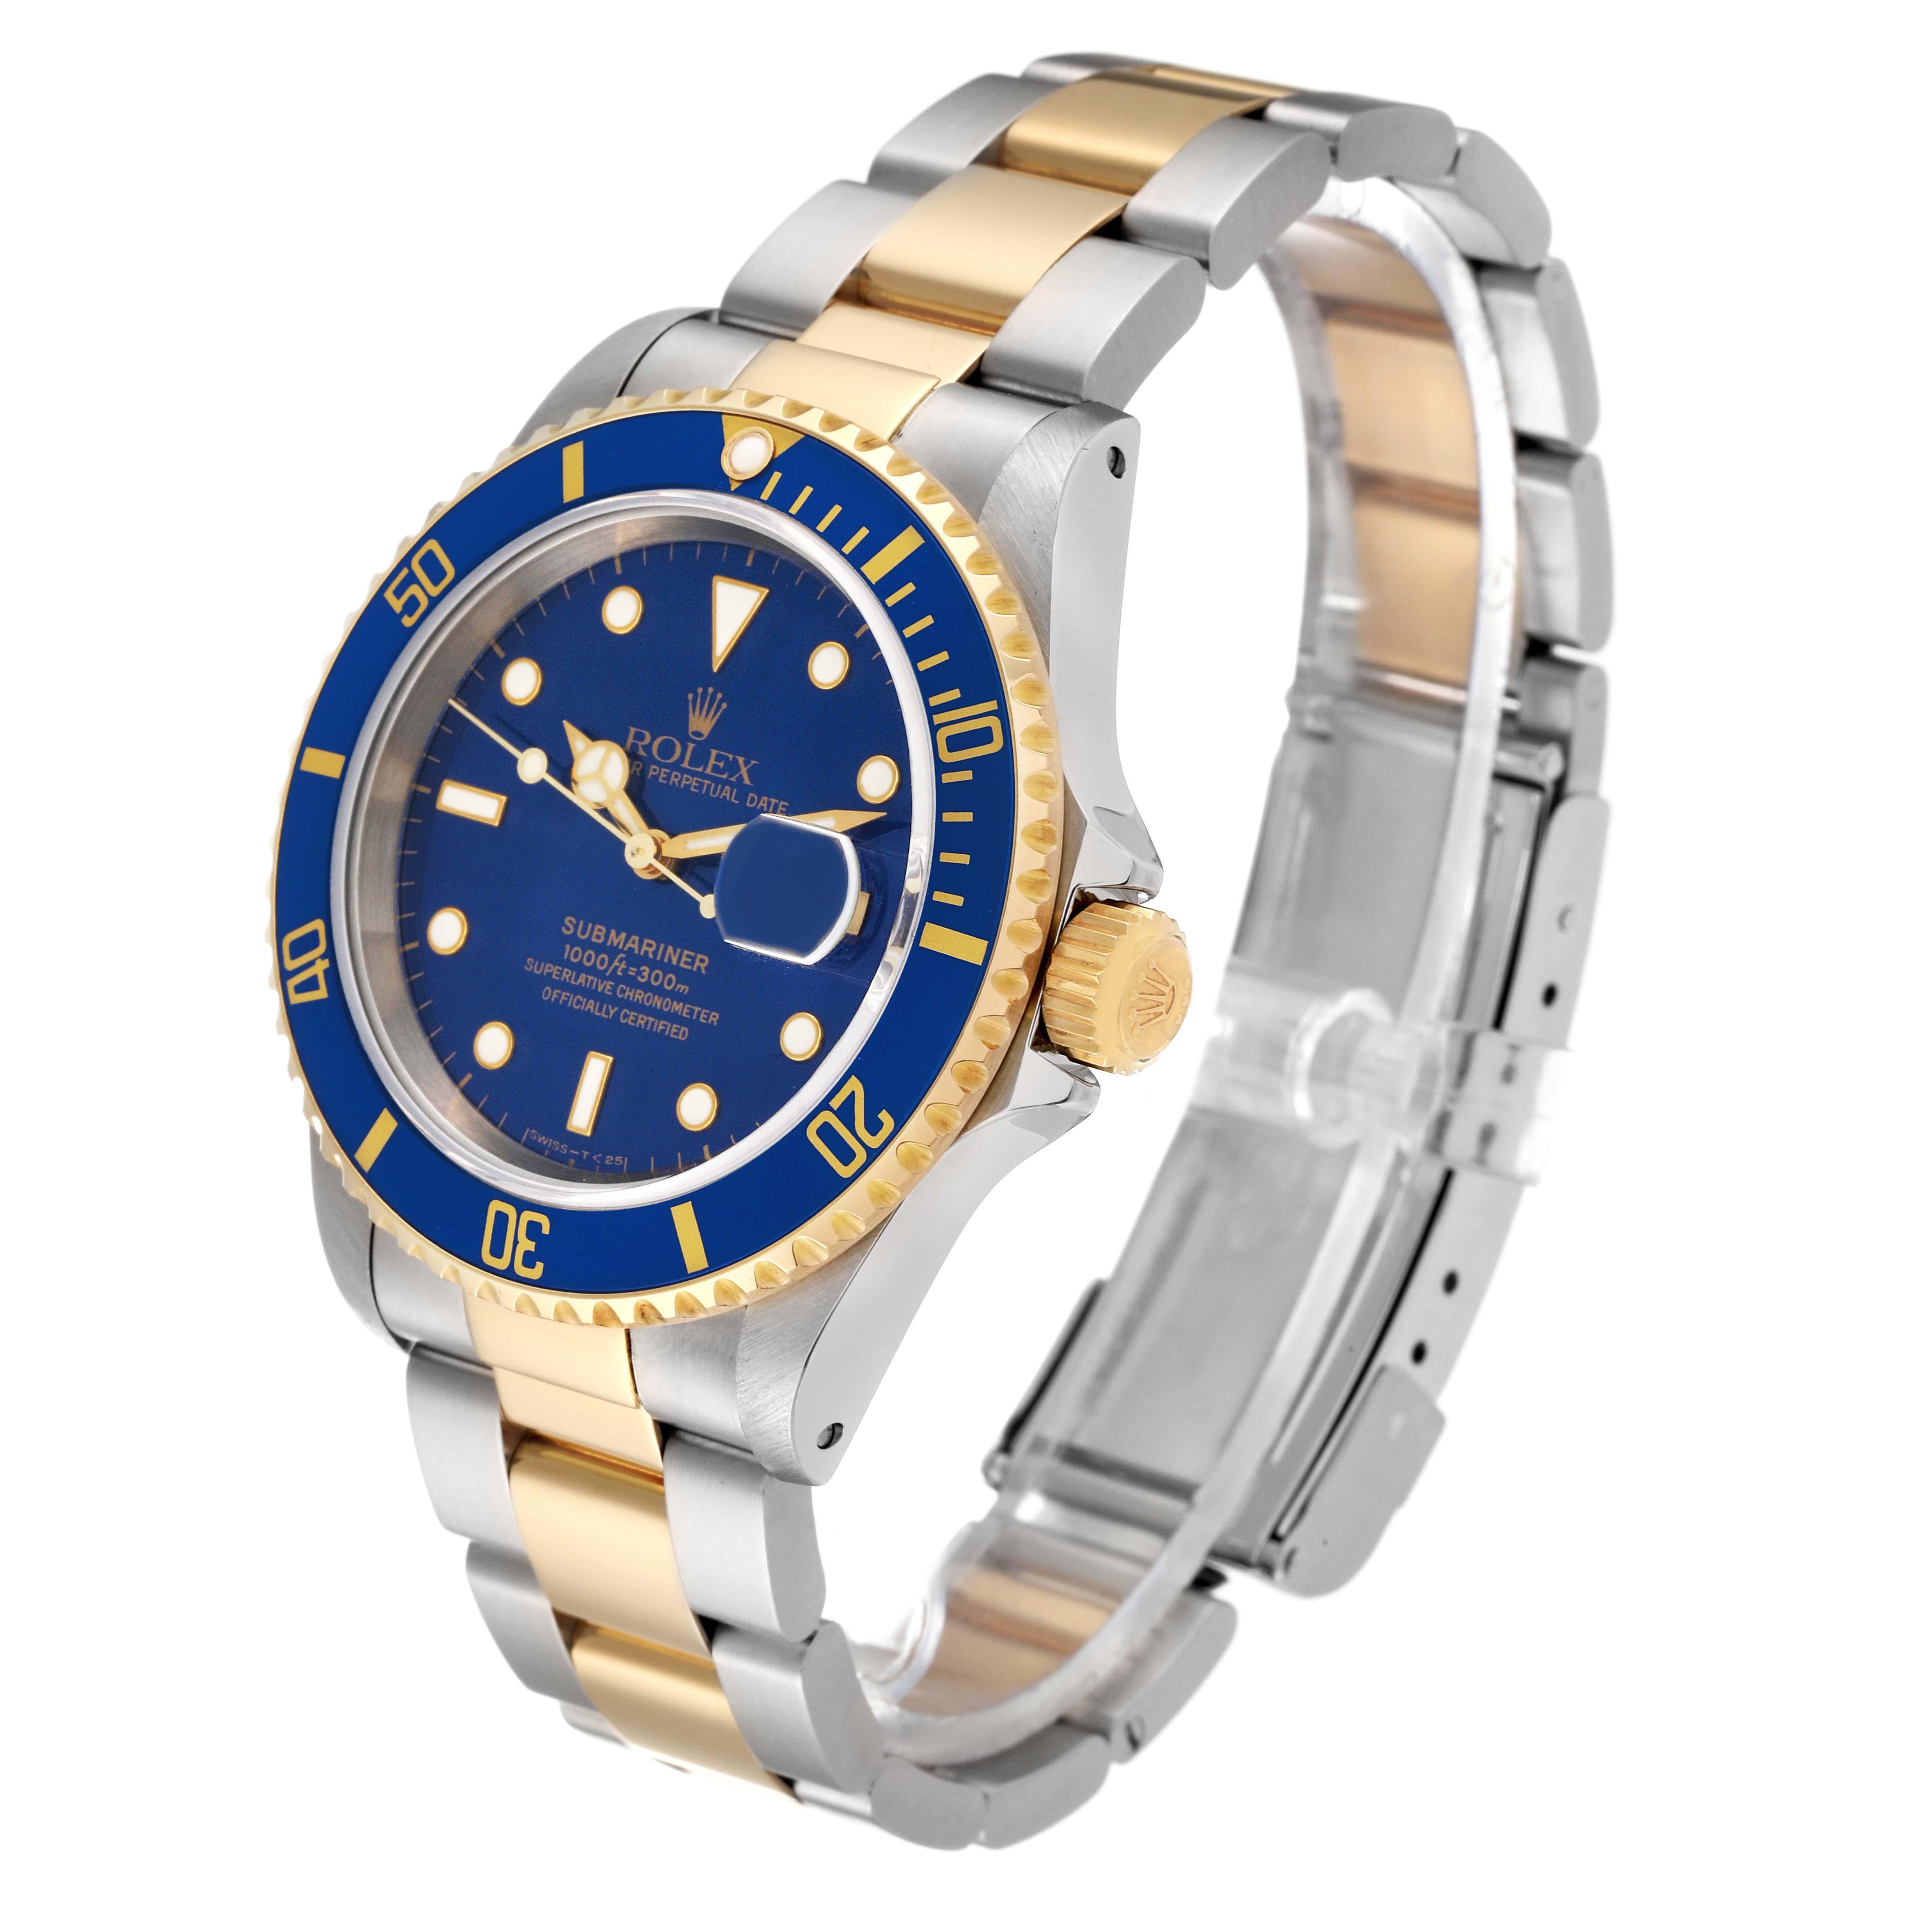 rolex submariner blue gold price